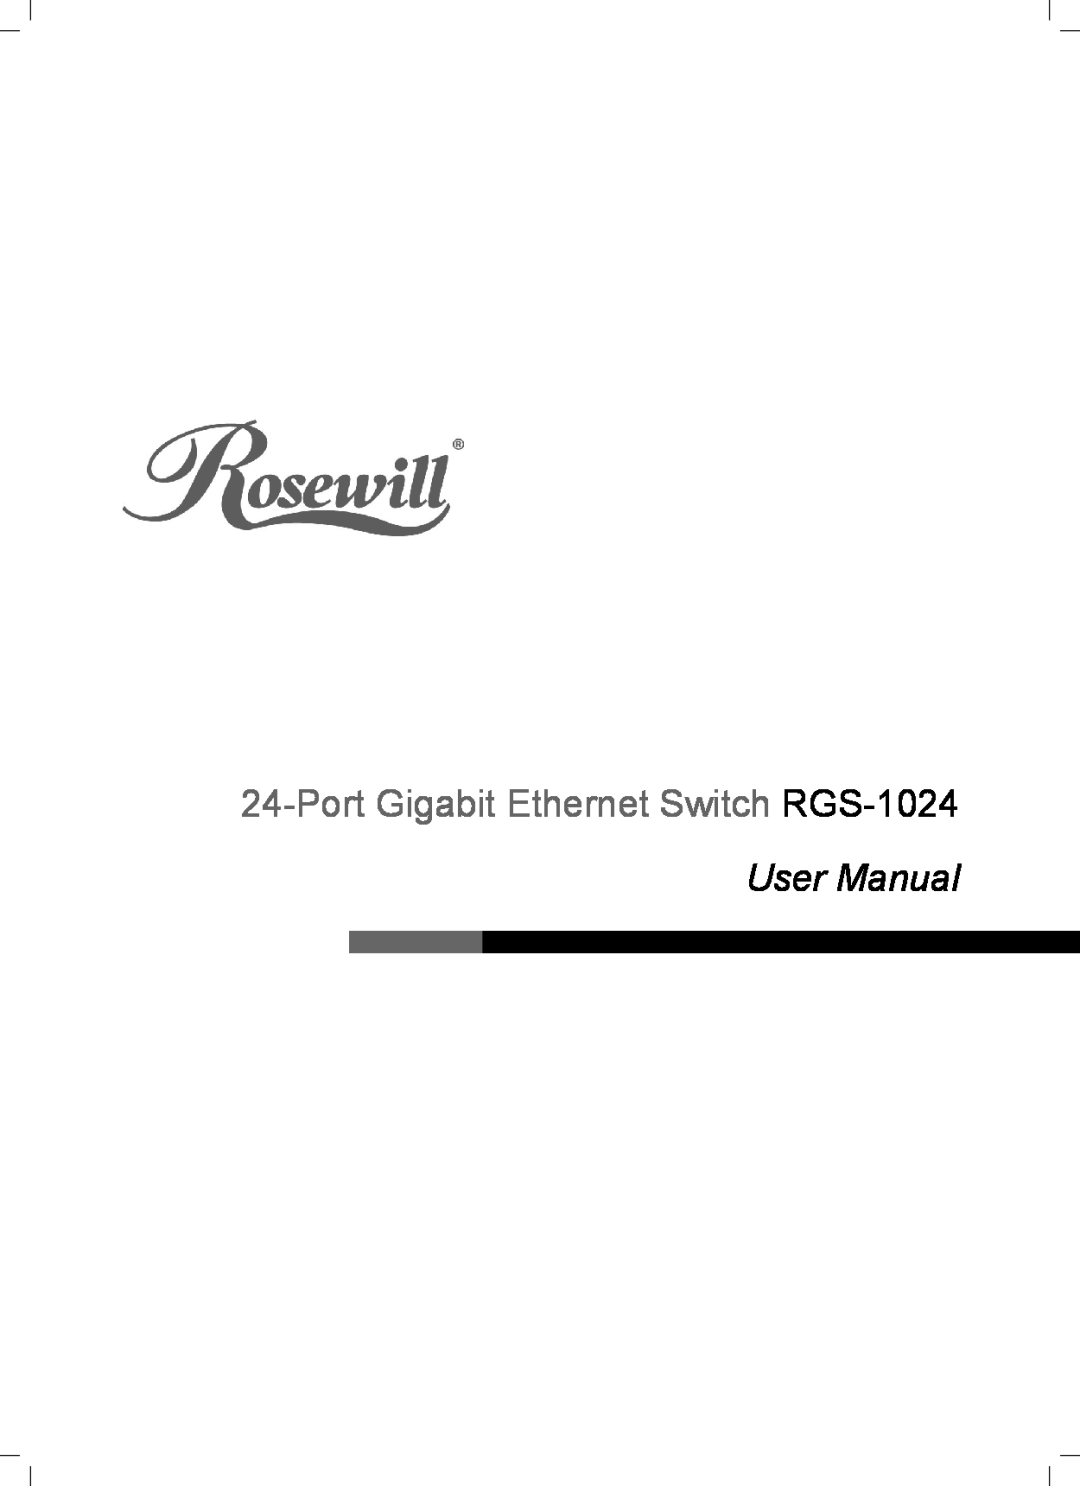 Rosewill user manual Port Gigabit Ethernet Switch RGS-1024, User Manual 